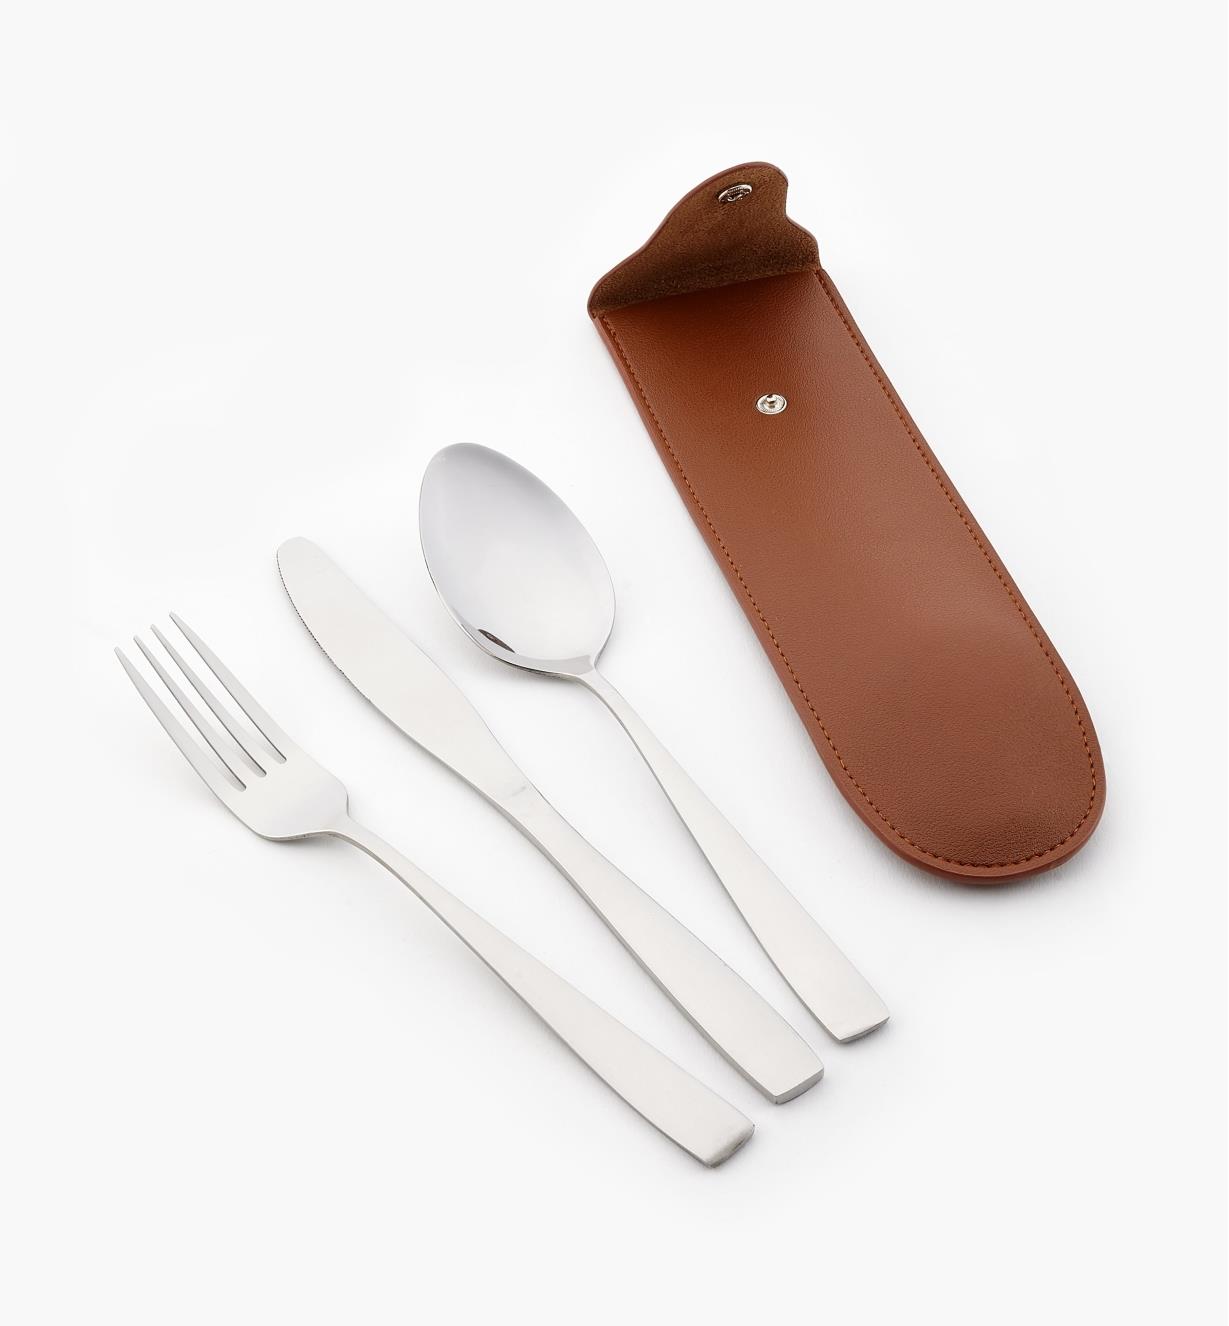 09A0408 - Portable Cutlery Set